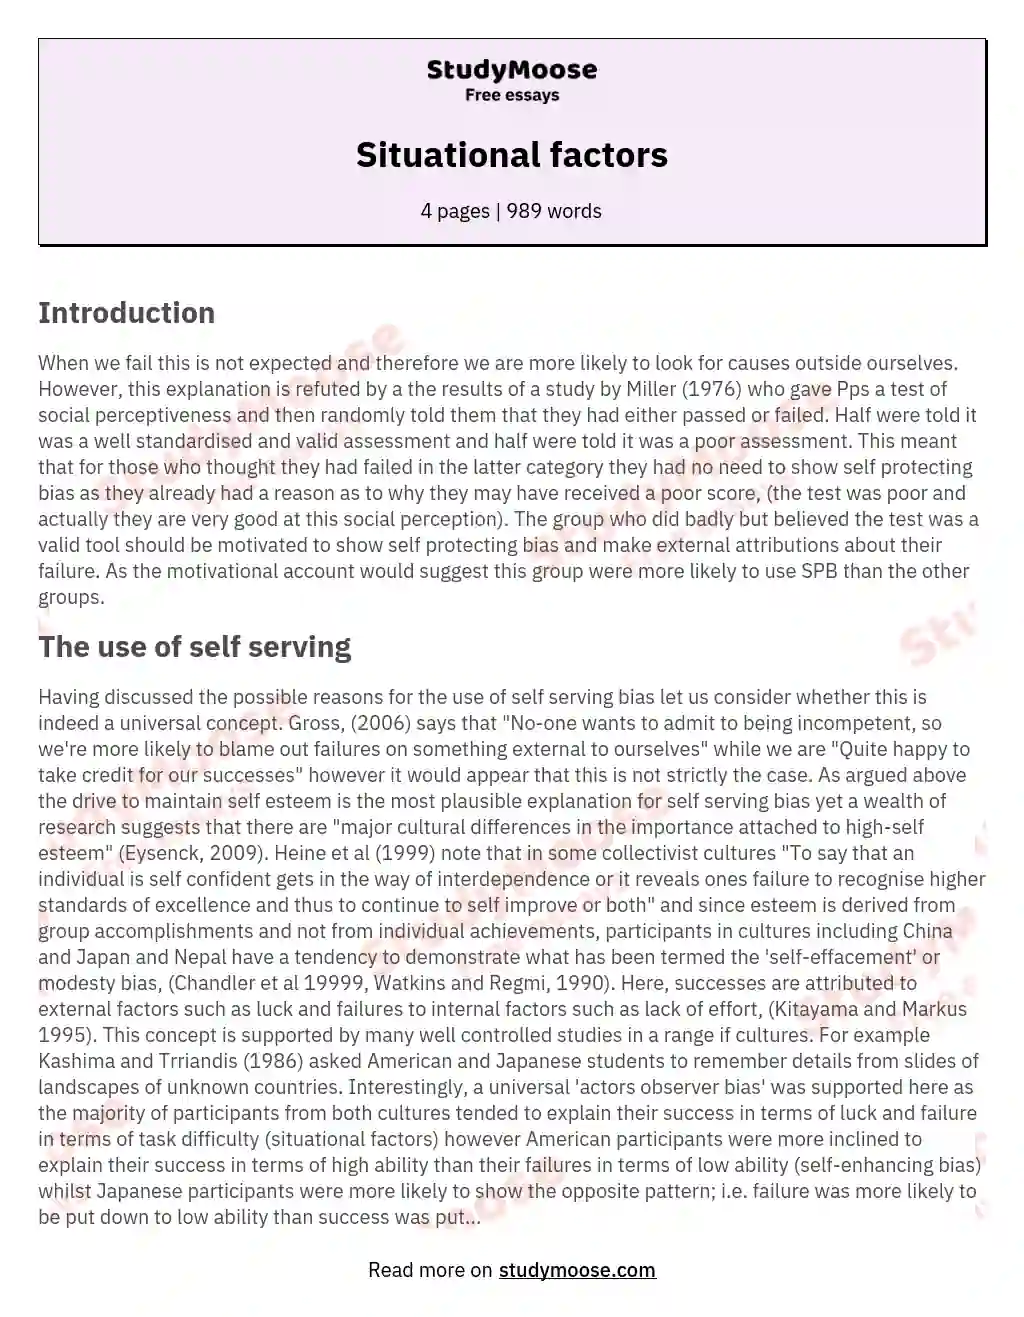 Situational factors essay